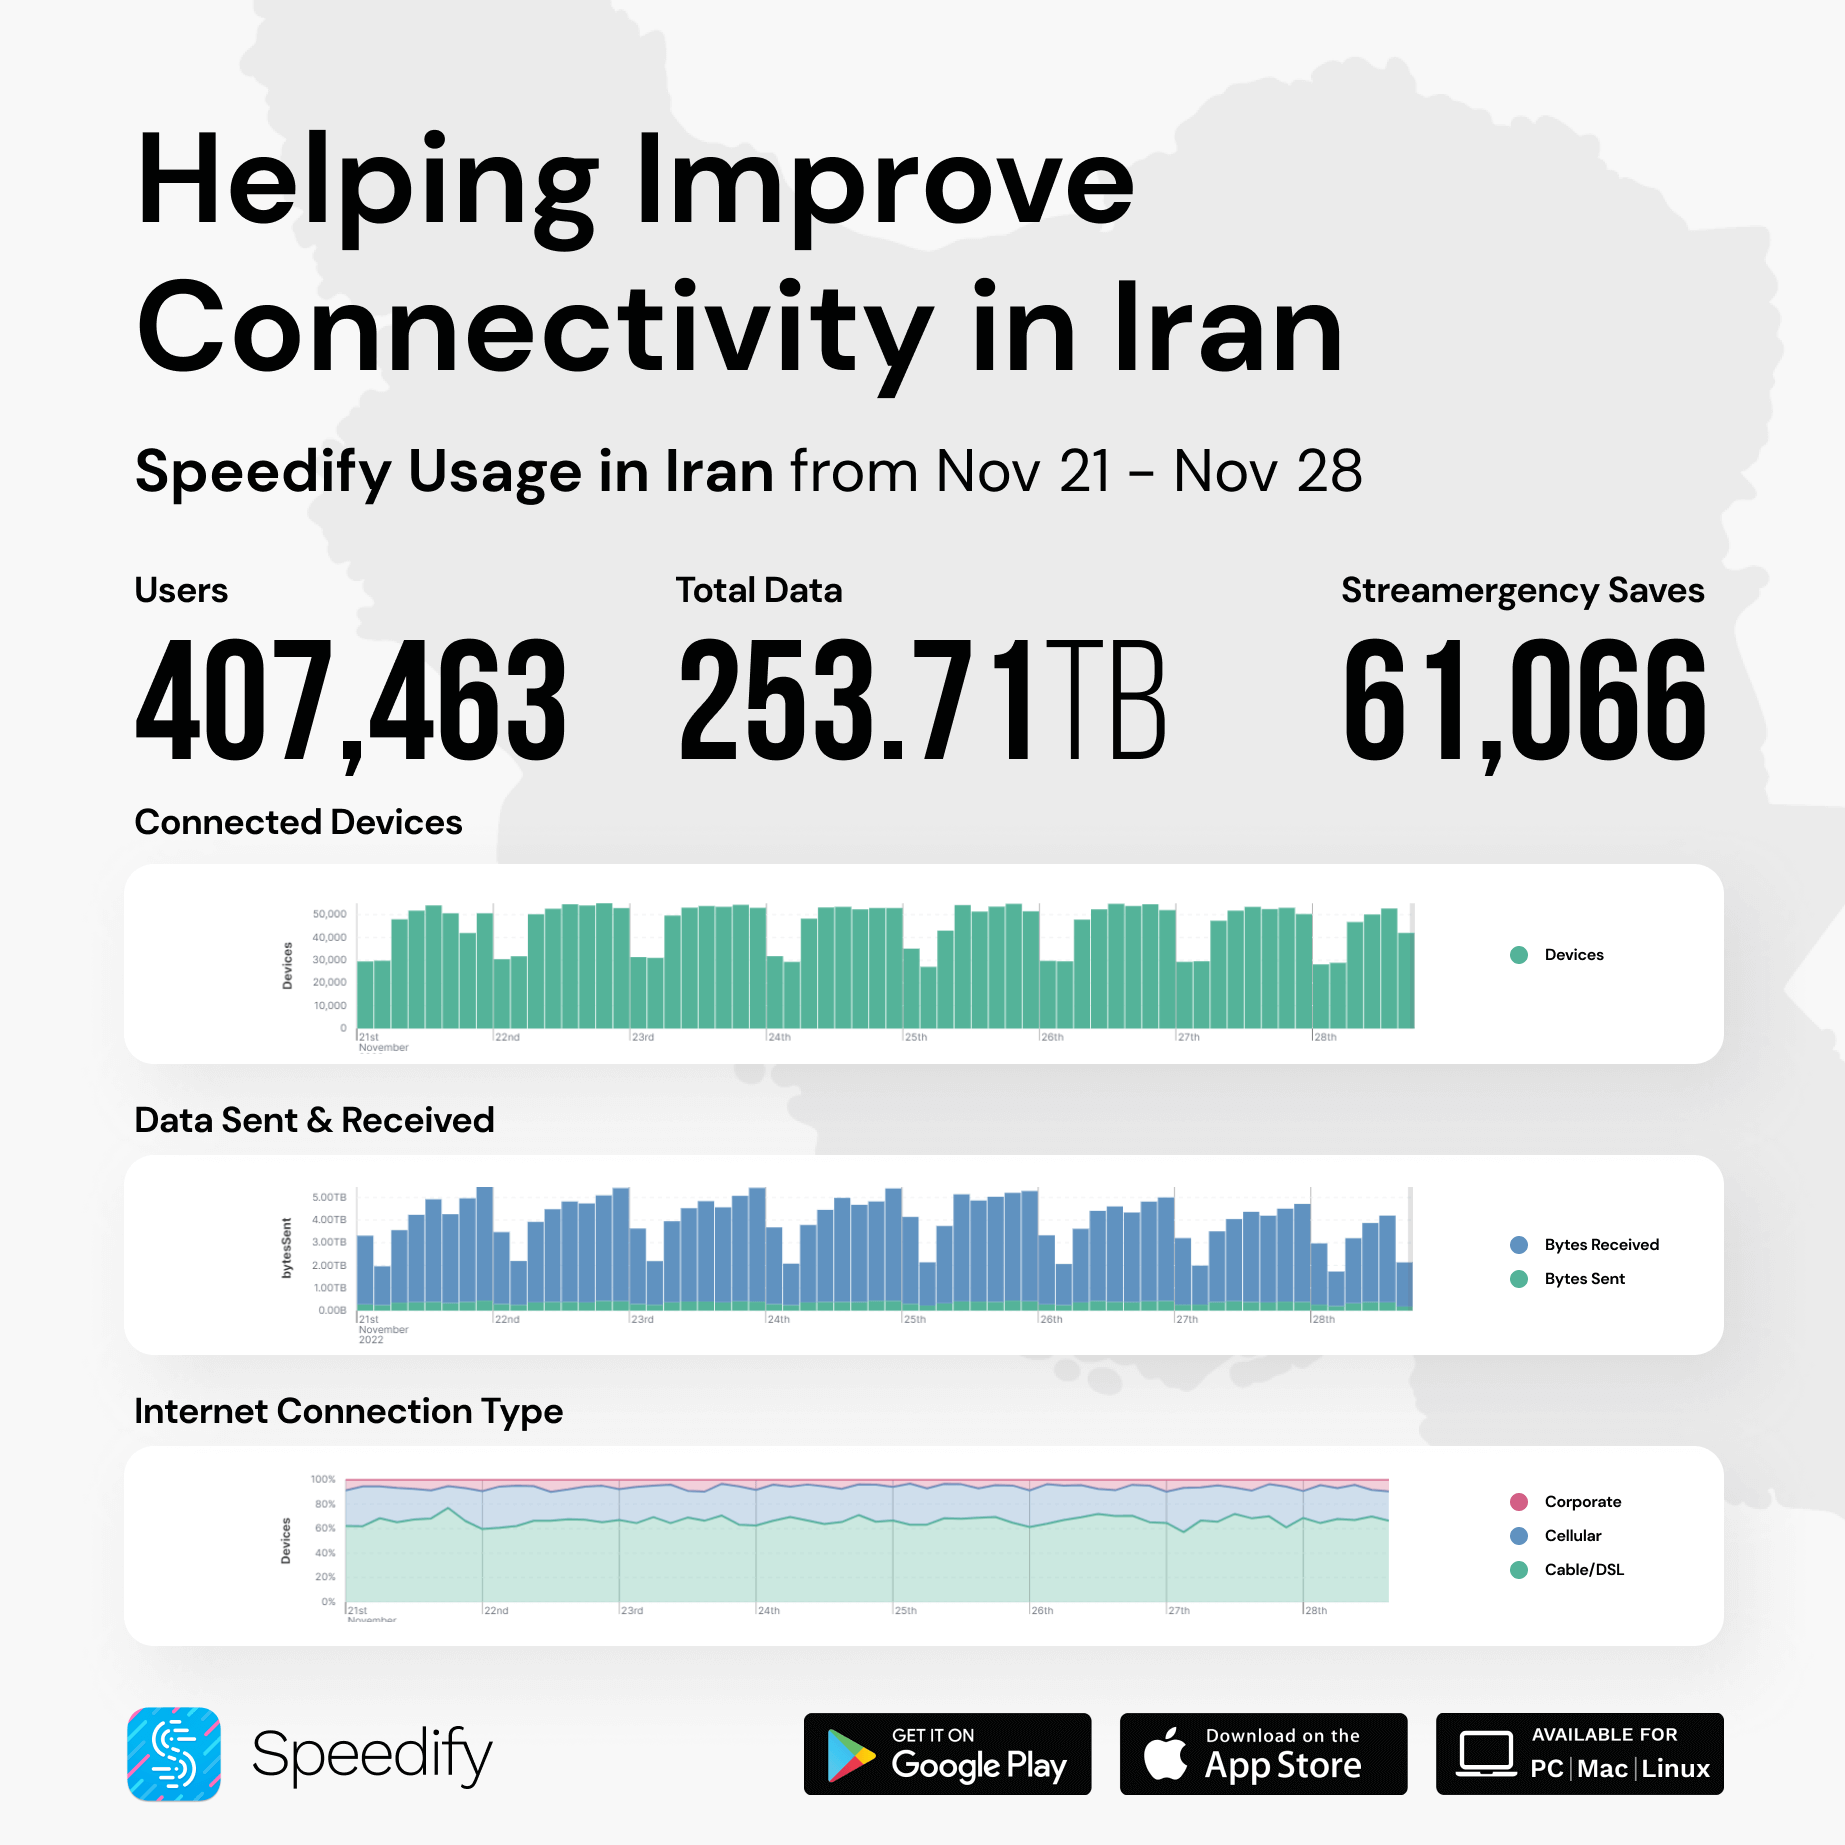 Nov 28 - Iran Internet usage for Speedify users